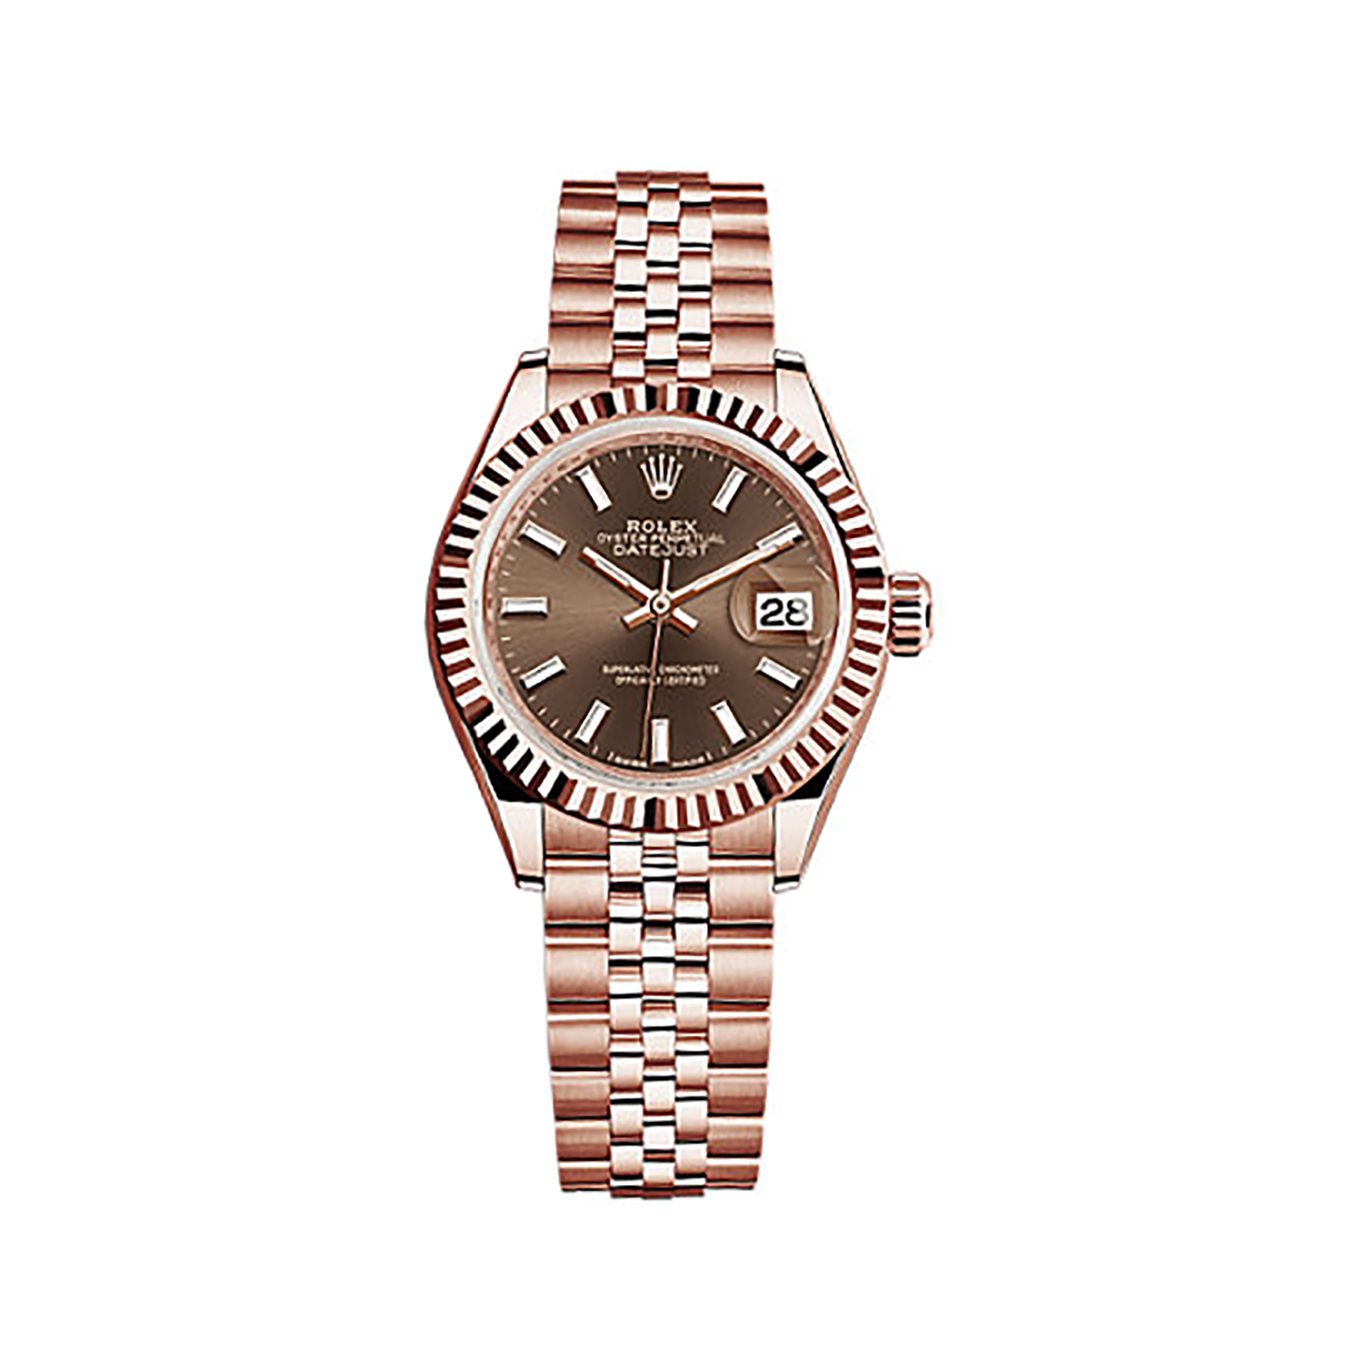 Lady-Datejust 28 279175 Rose Gold Watch (Chocolate)